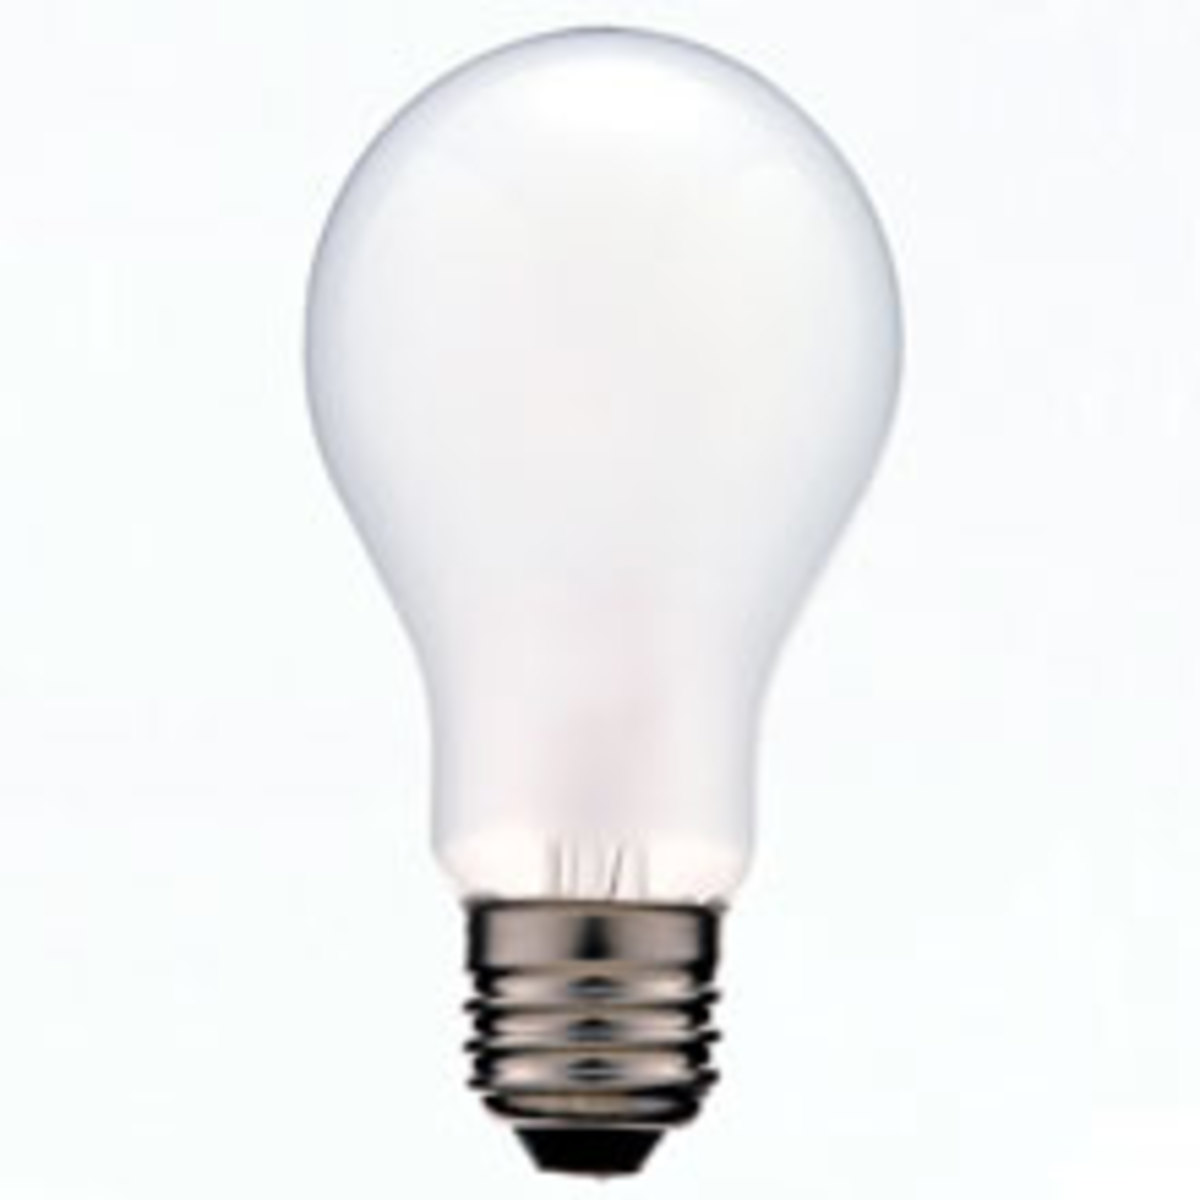 Incandescent light bulb (25-watt (1) and 100 watts (2))